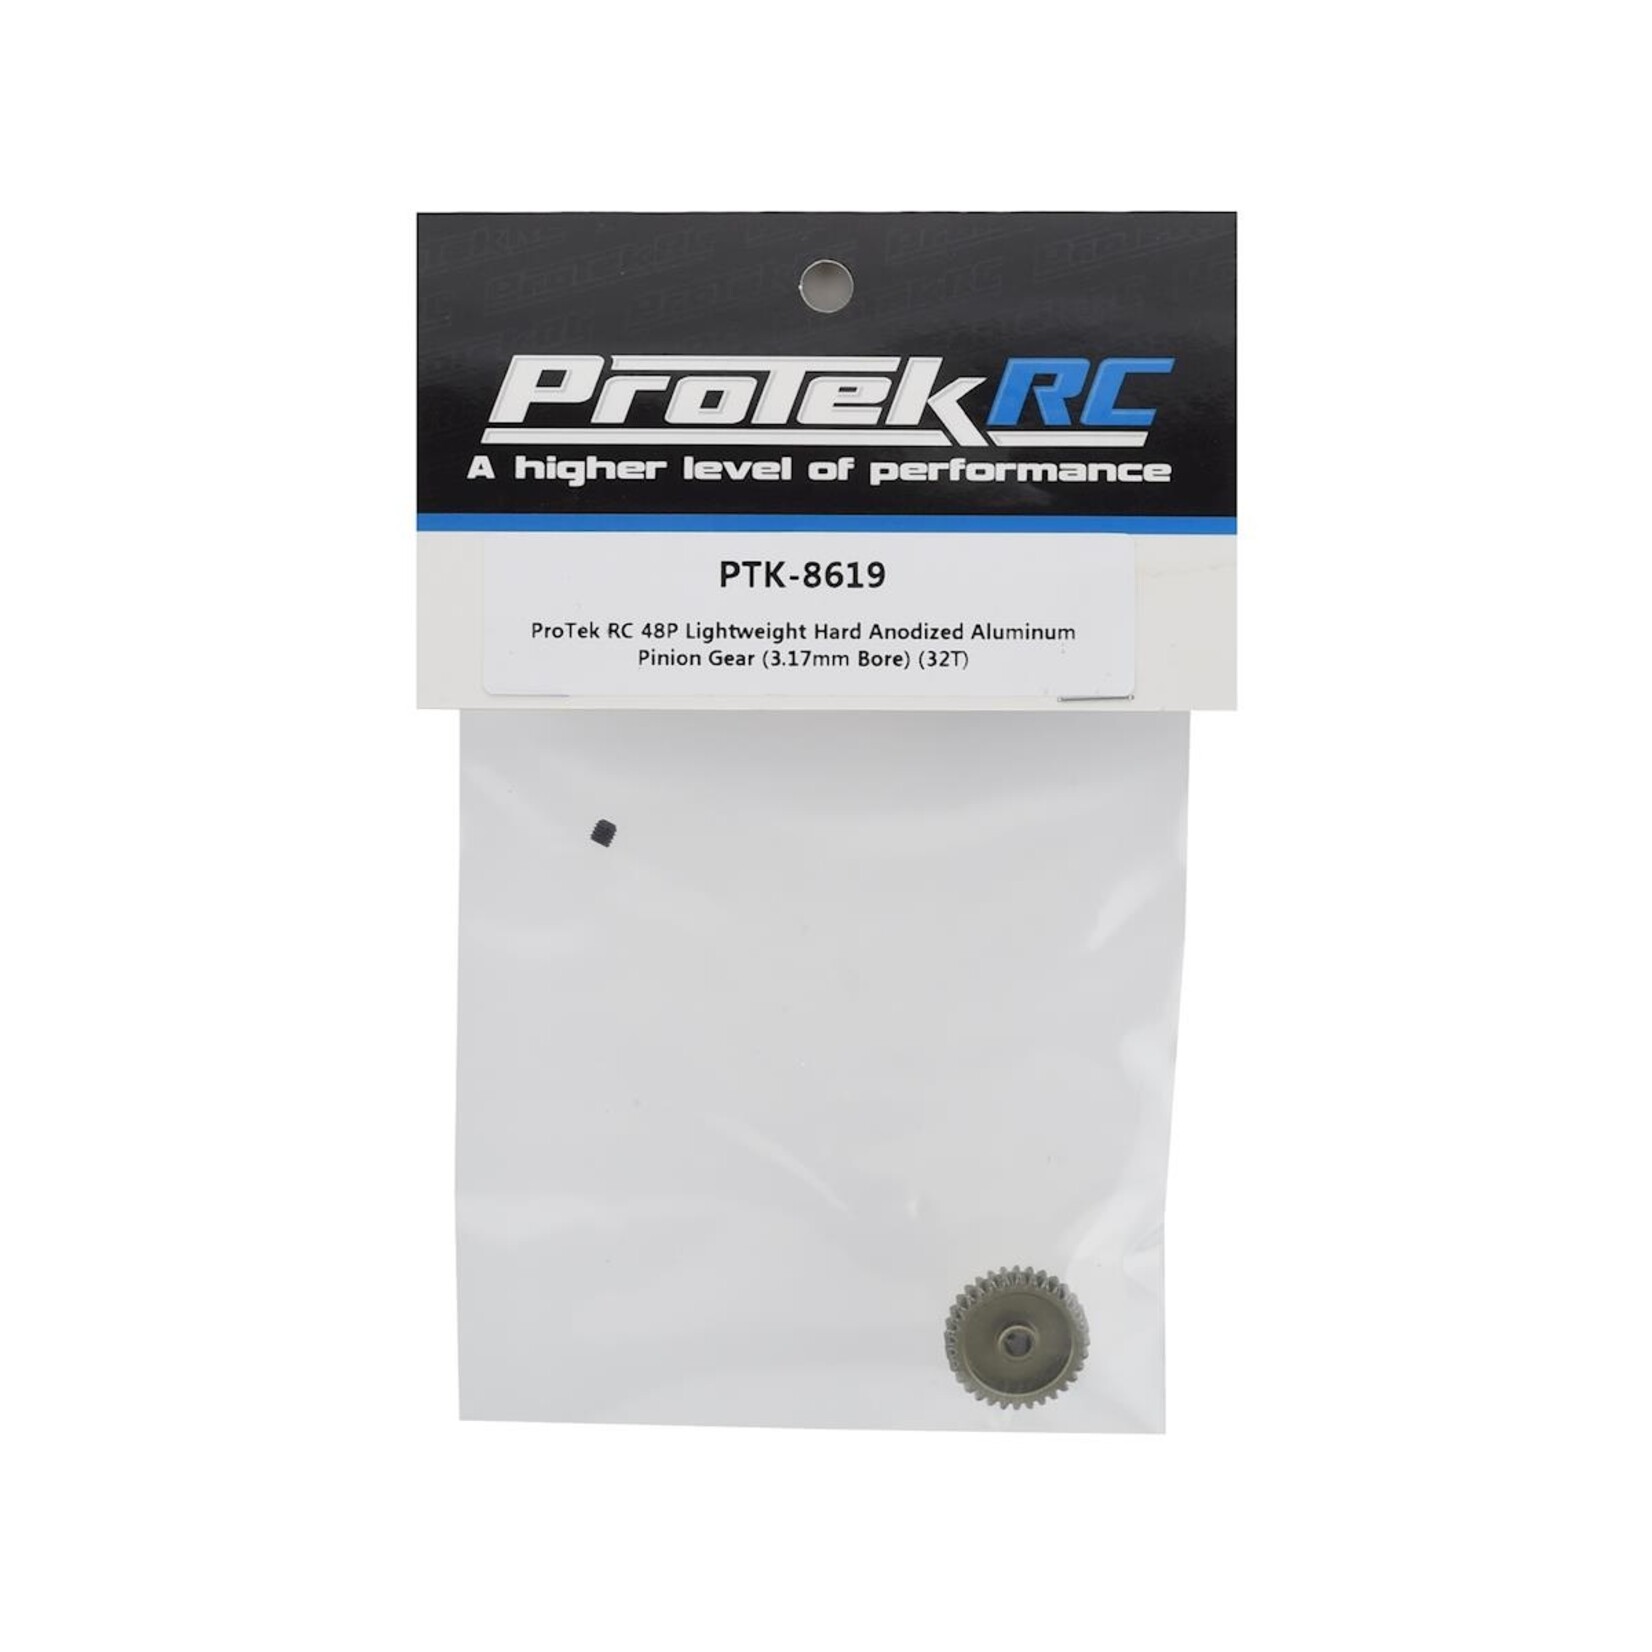 ProTek RC ProTek RC 48P Lightweight Hard Anodized Aluminum Pinion Gear (3.17mm Bore) (32T) PTK-8619